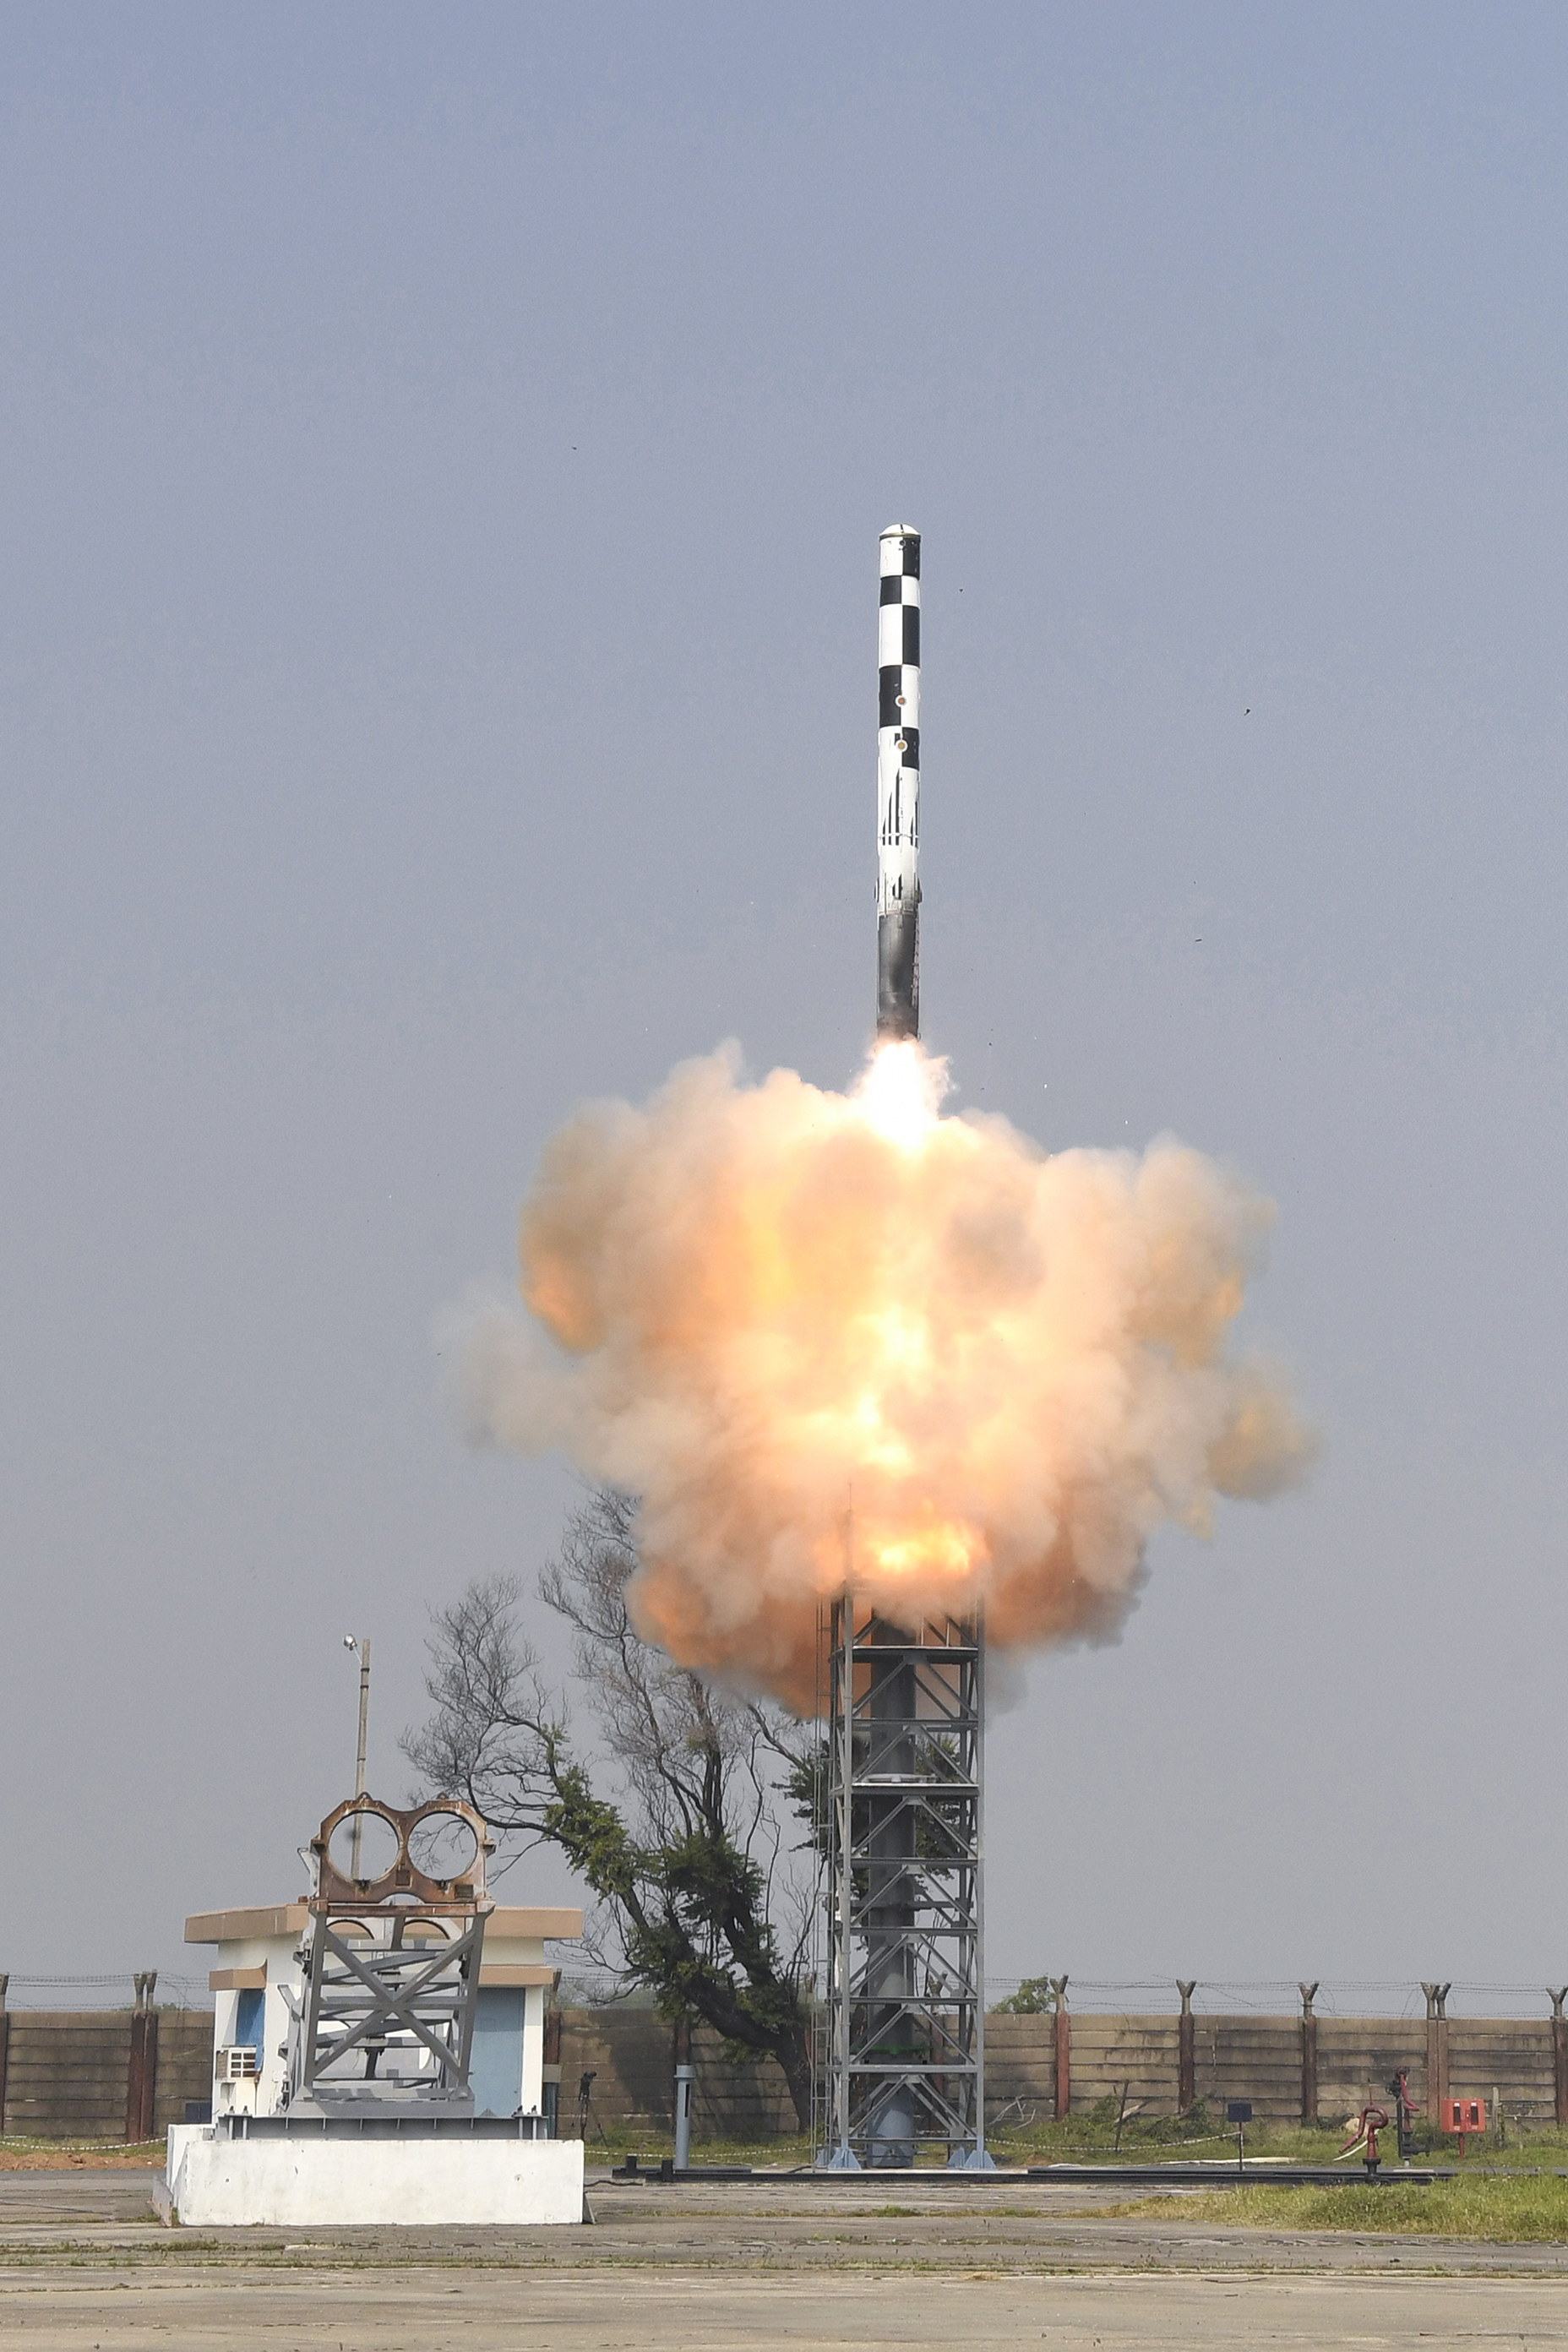 ब्रह्मोस सुपरसोनिक क्रूज मिसाइल का सफल परीक्षण किया गया